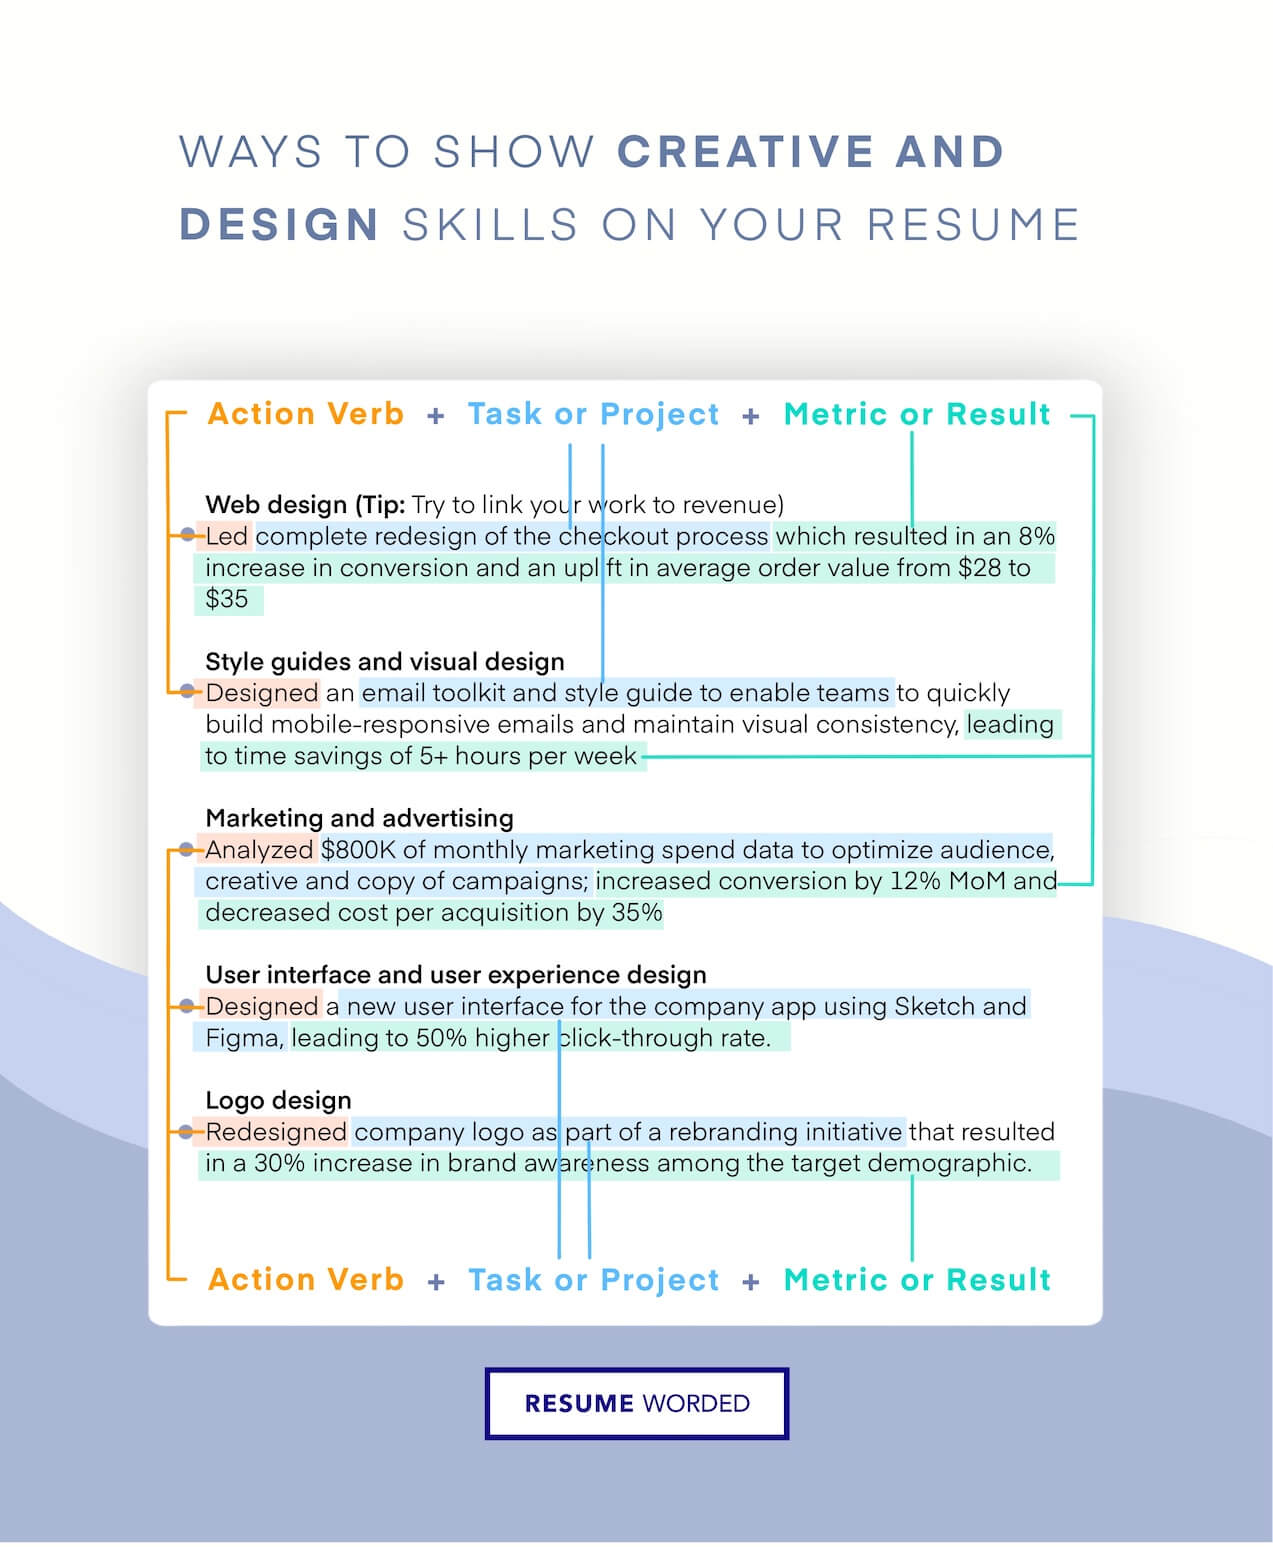 Showcase your design software skills - Interior Designer Resume